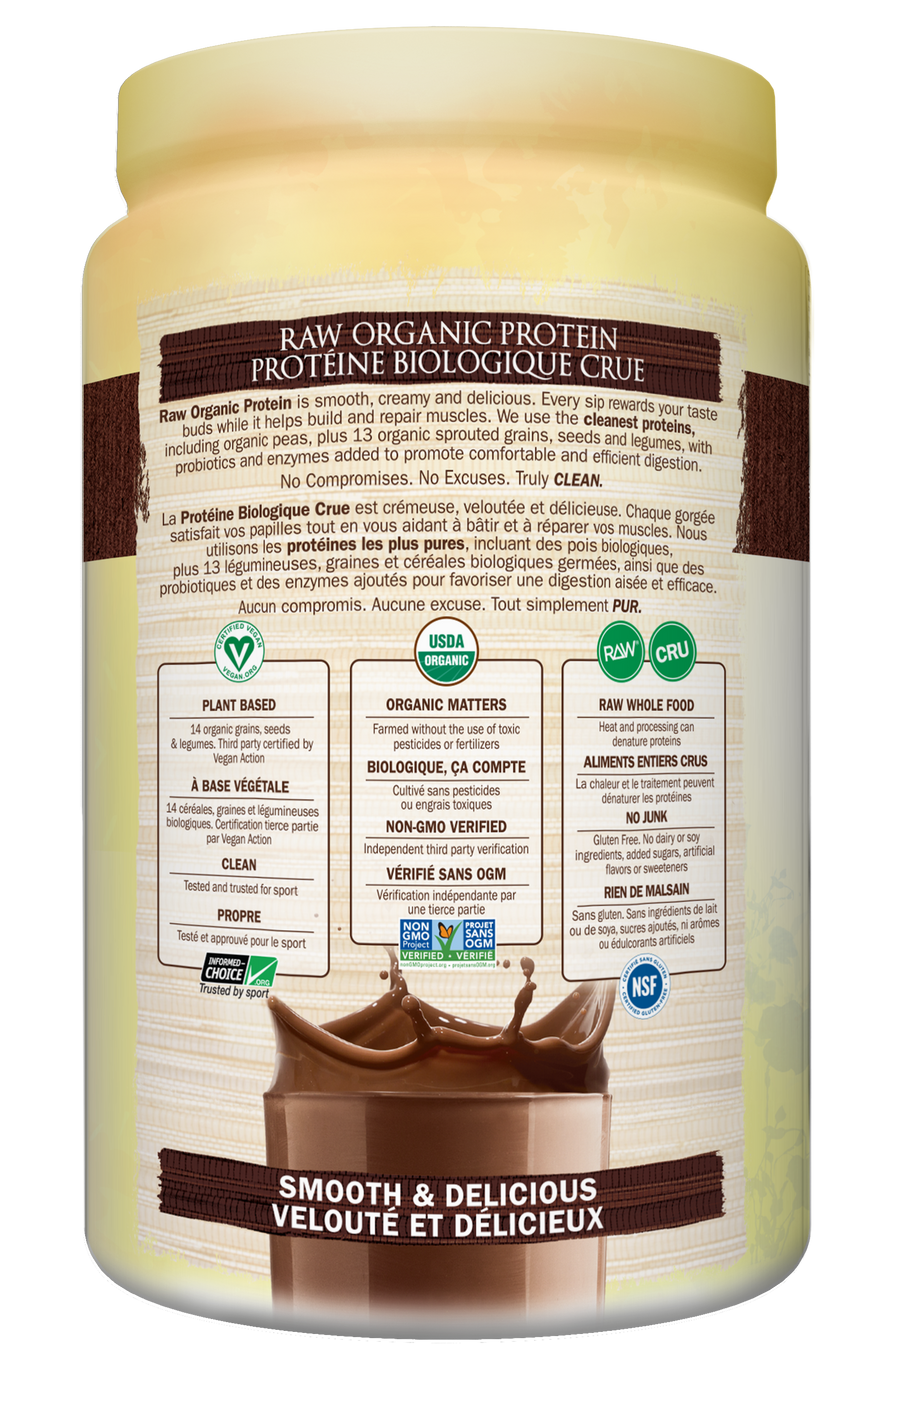 Garden of Life Raw Organic Protein Chocolate 660g